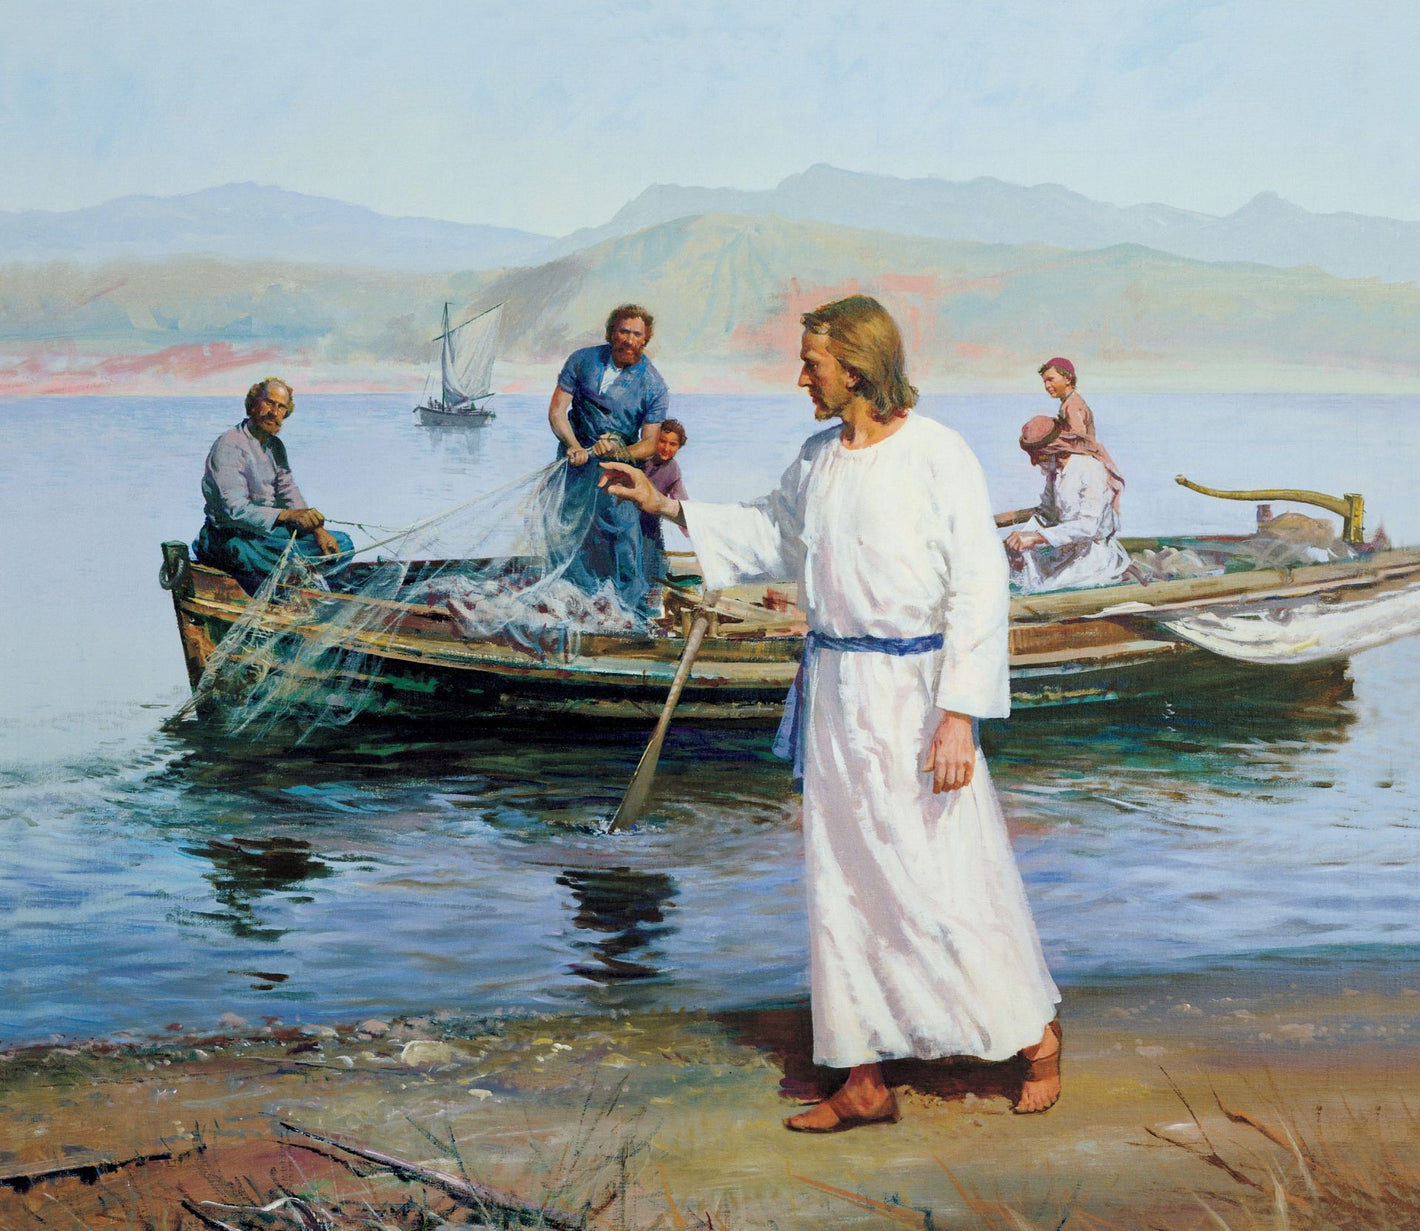 Christ calling the fishermen to follow him